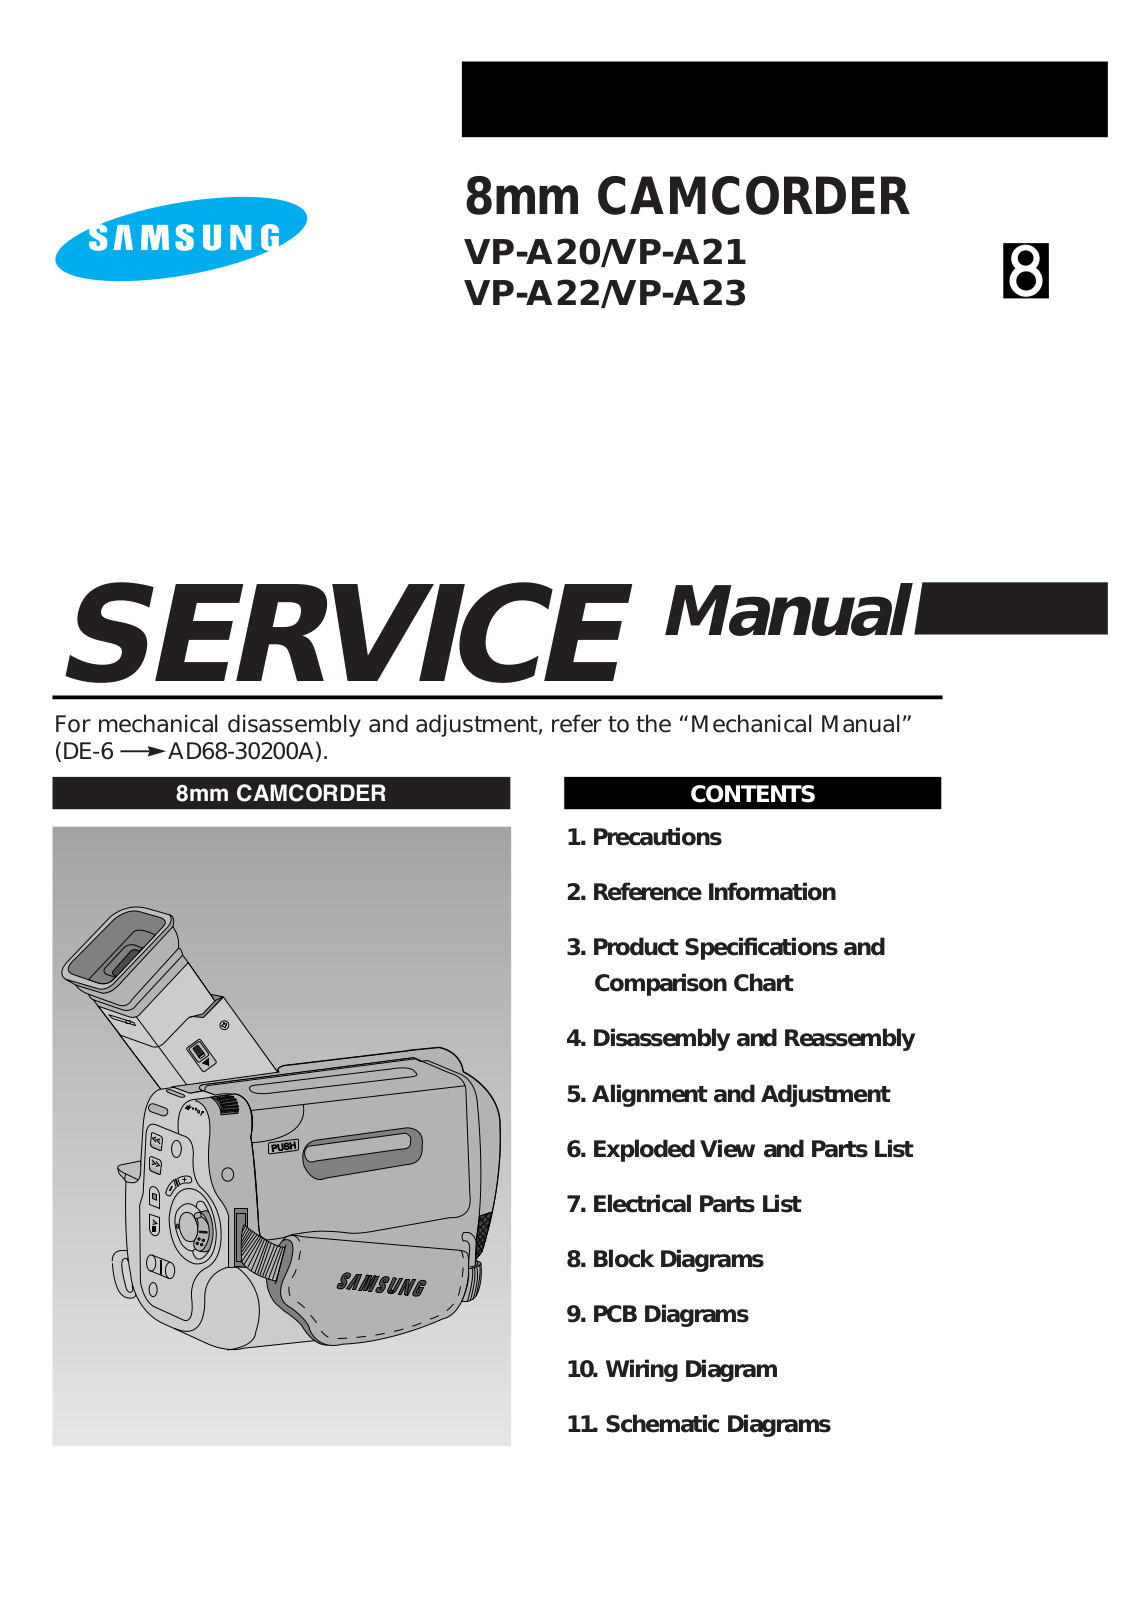 SAMSUNG VP-A20-23 Service Manual